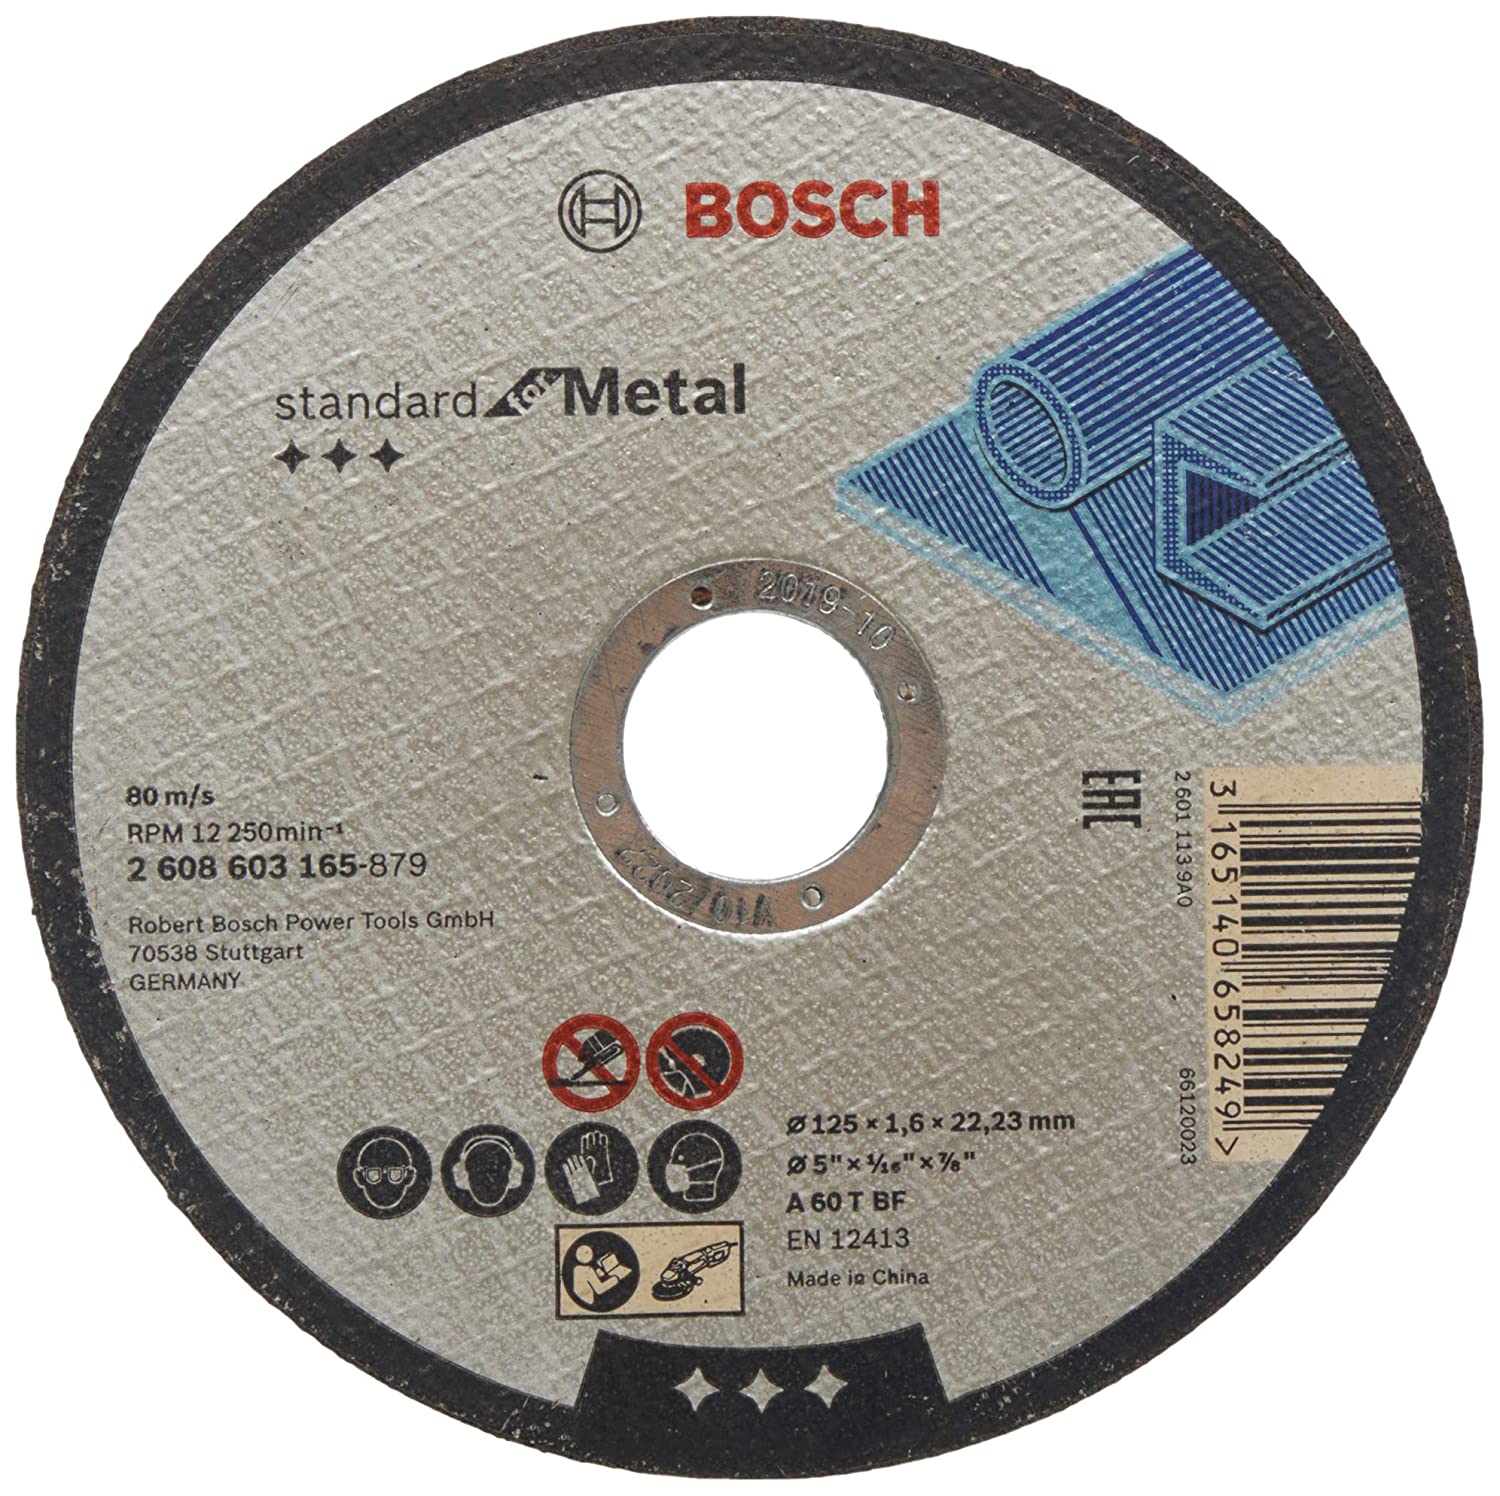 Bosch cutting disc Standard for Metal 125 x 1.6 mm (A 60 T BF) 2608603165 (3165140658249)